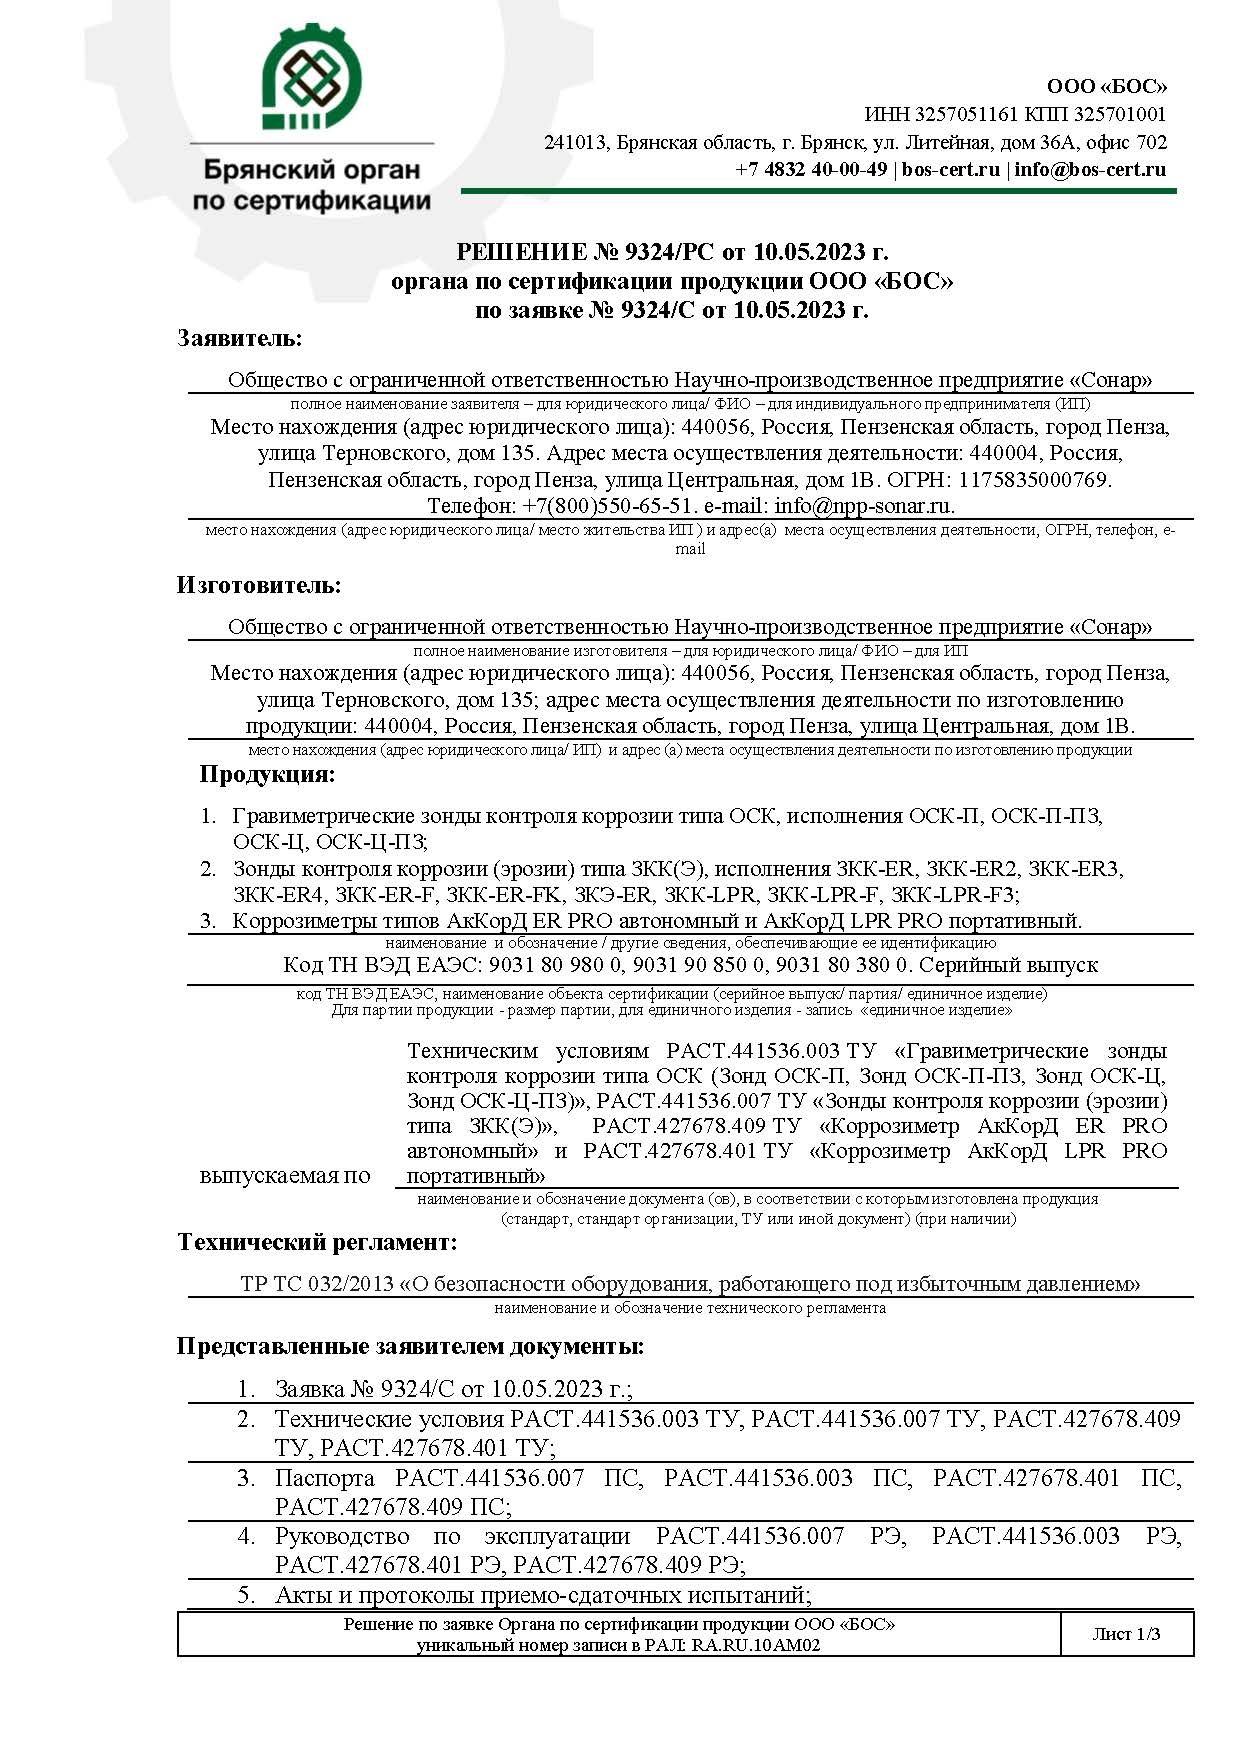 Решение № 9324 РС. Отказ в проведении сертификации по ТР ТС 032 2013